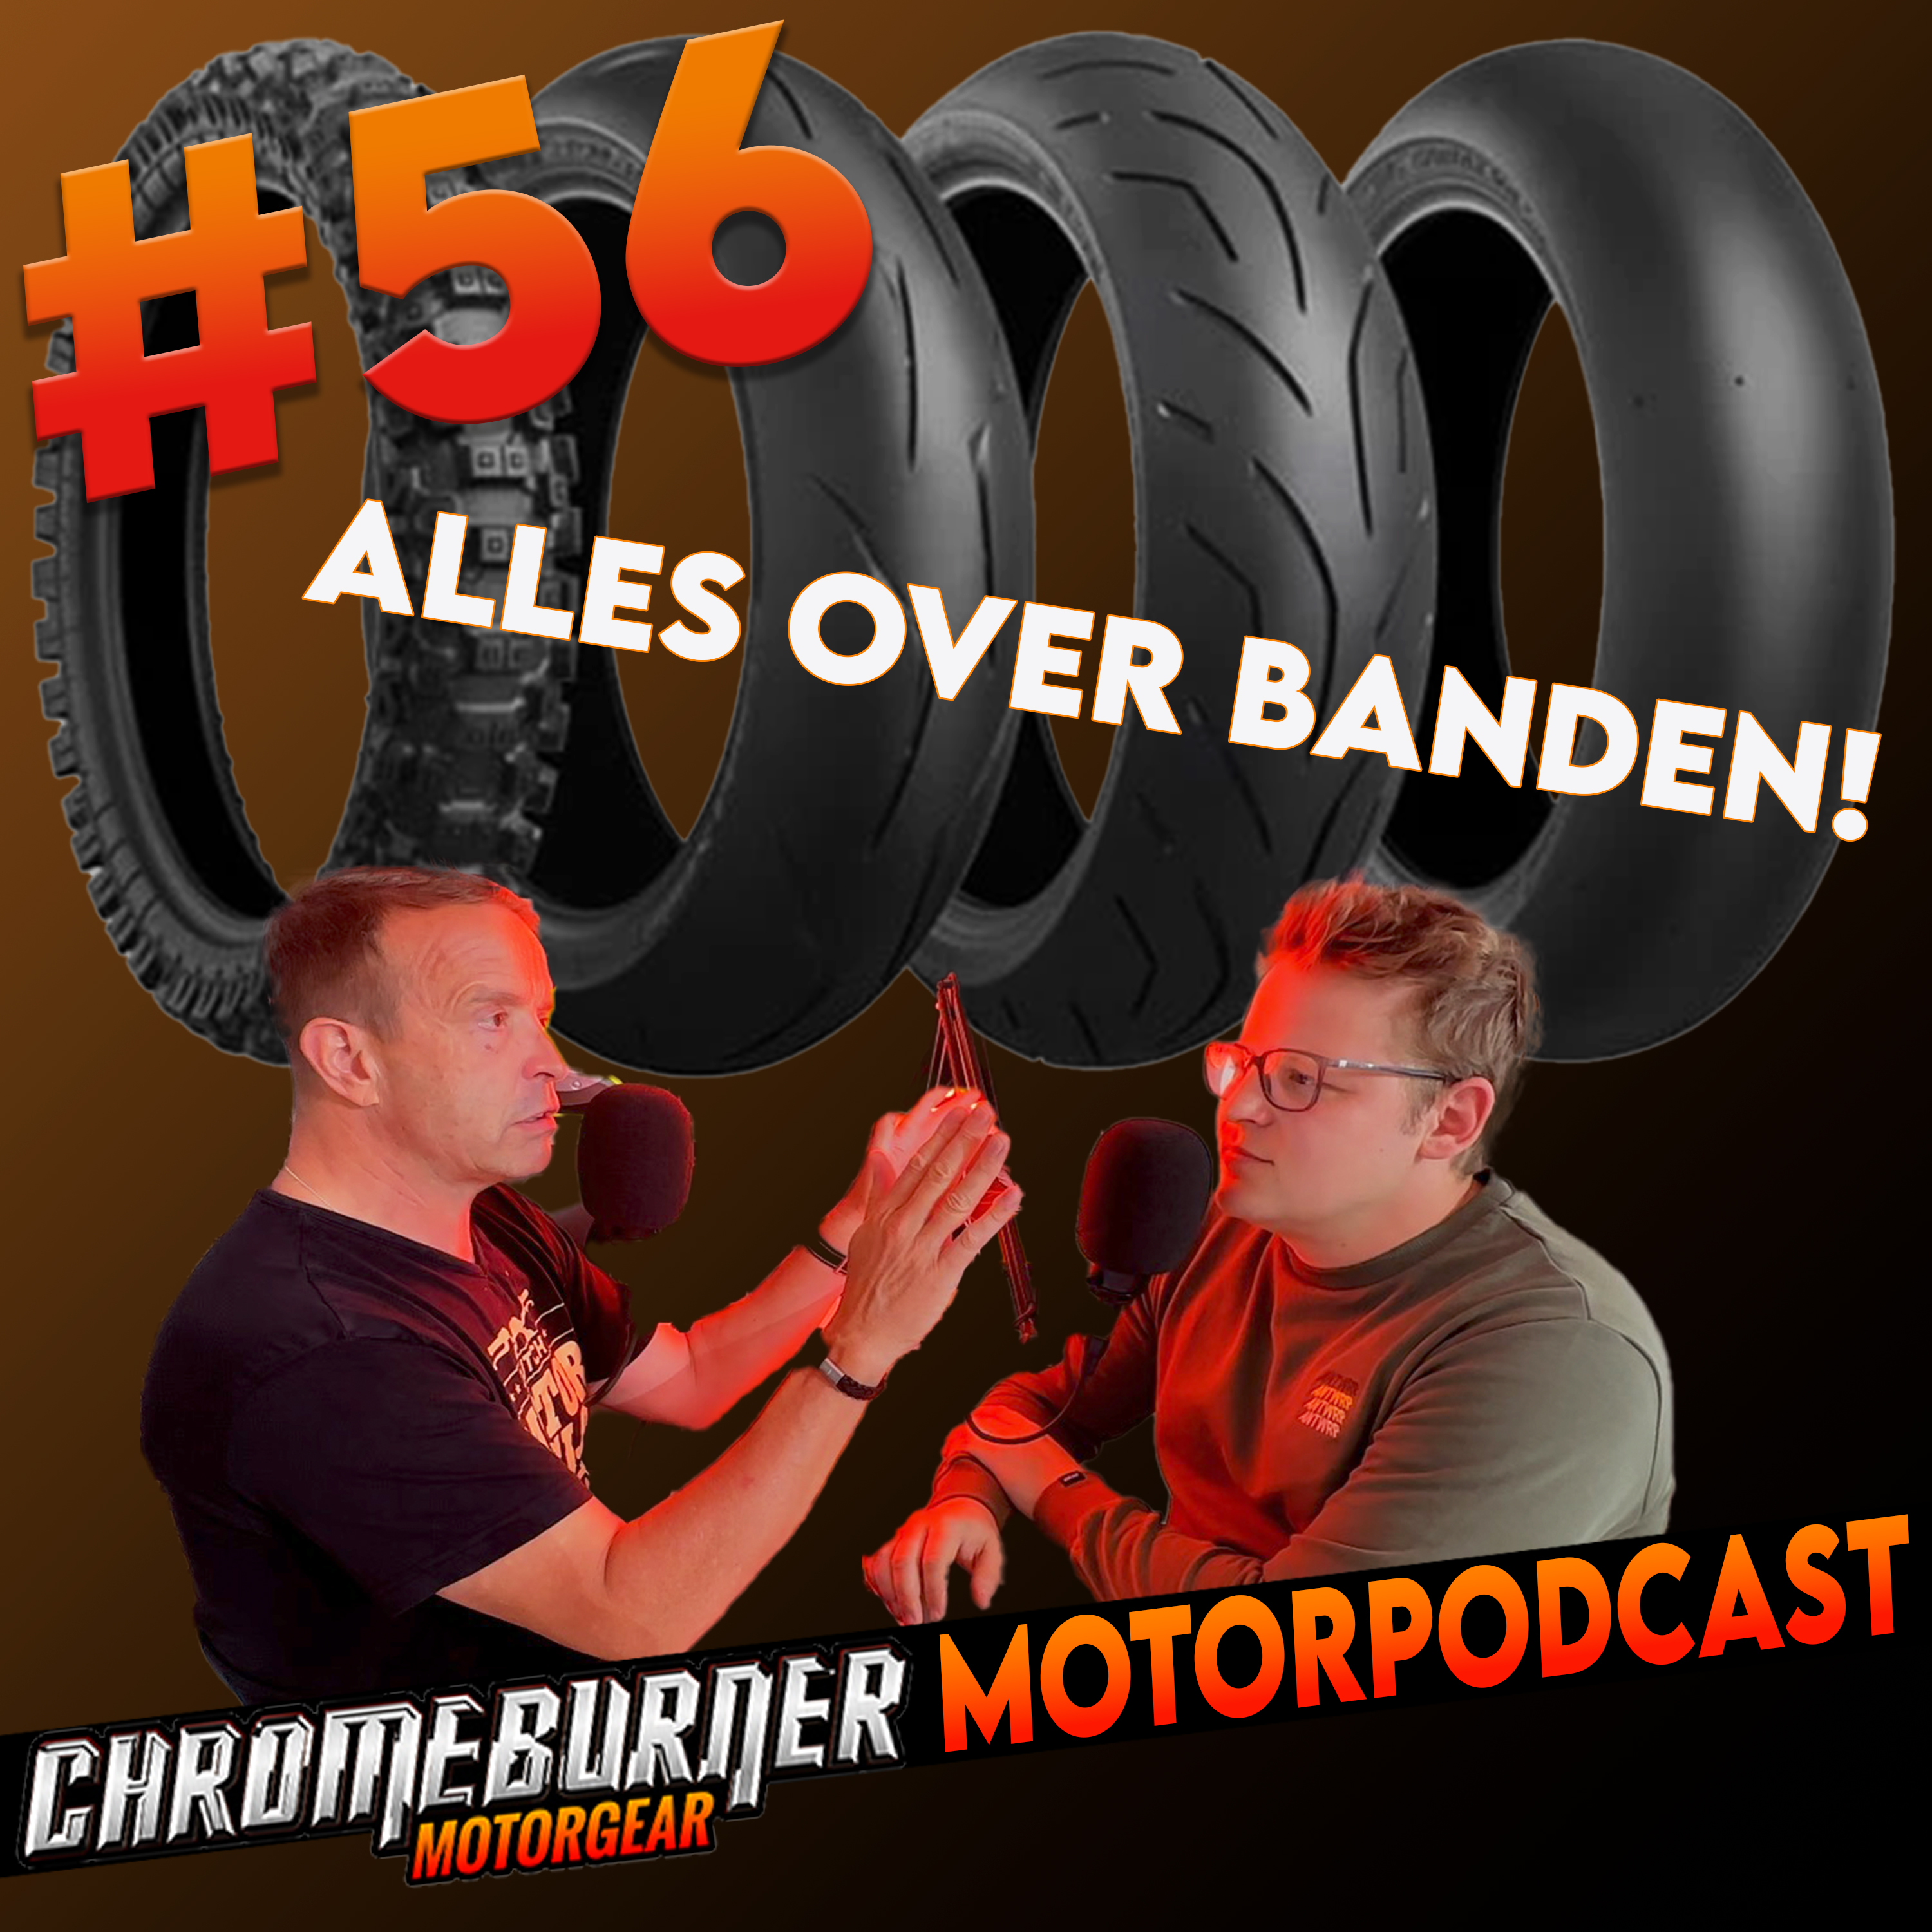 ChromeBurner MotoPodcast #56: MotorBandenspecial!